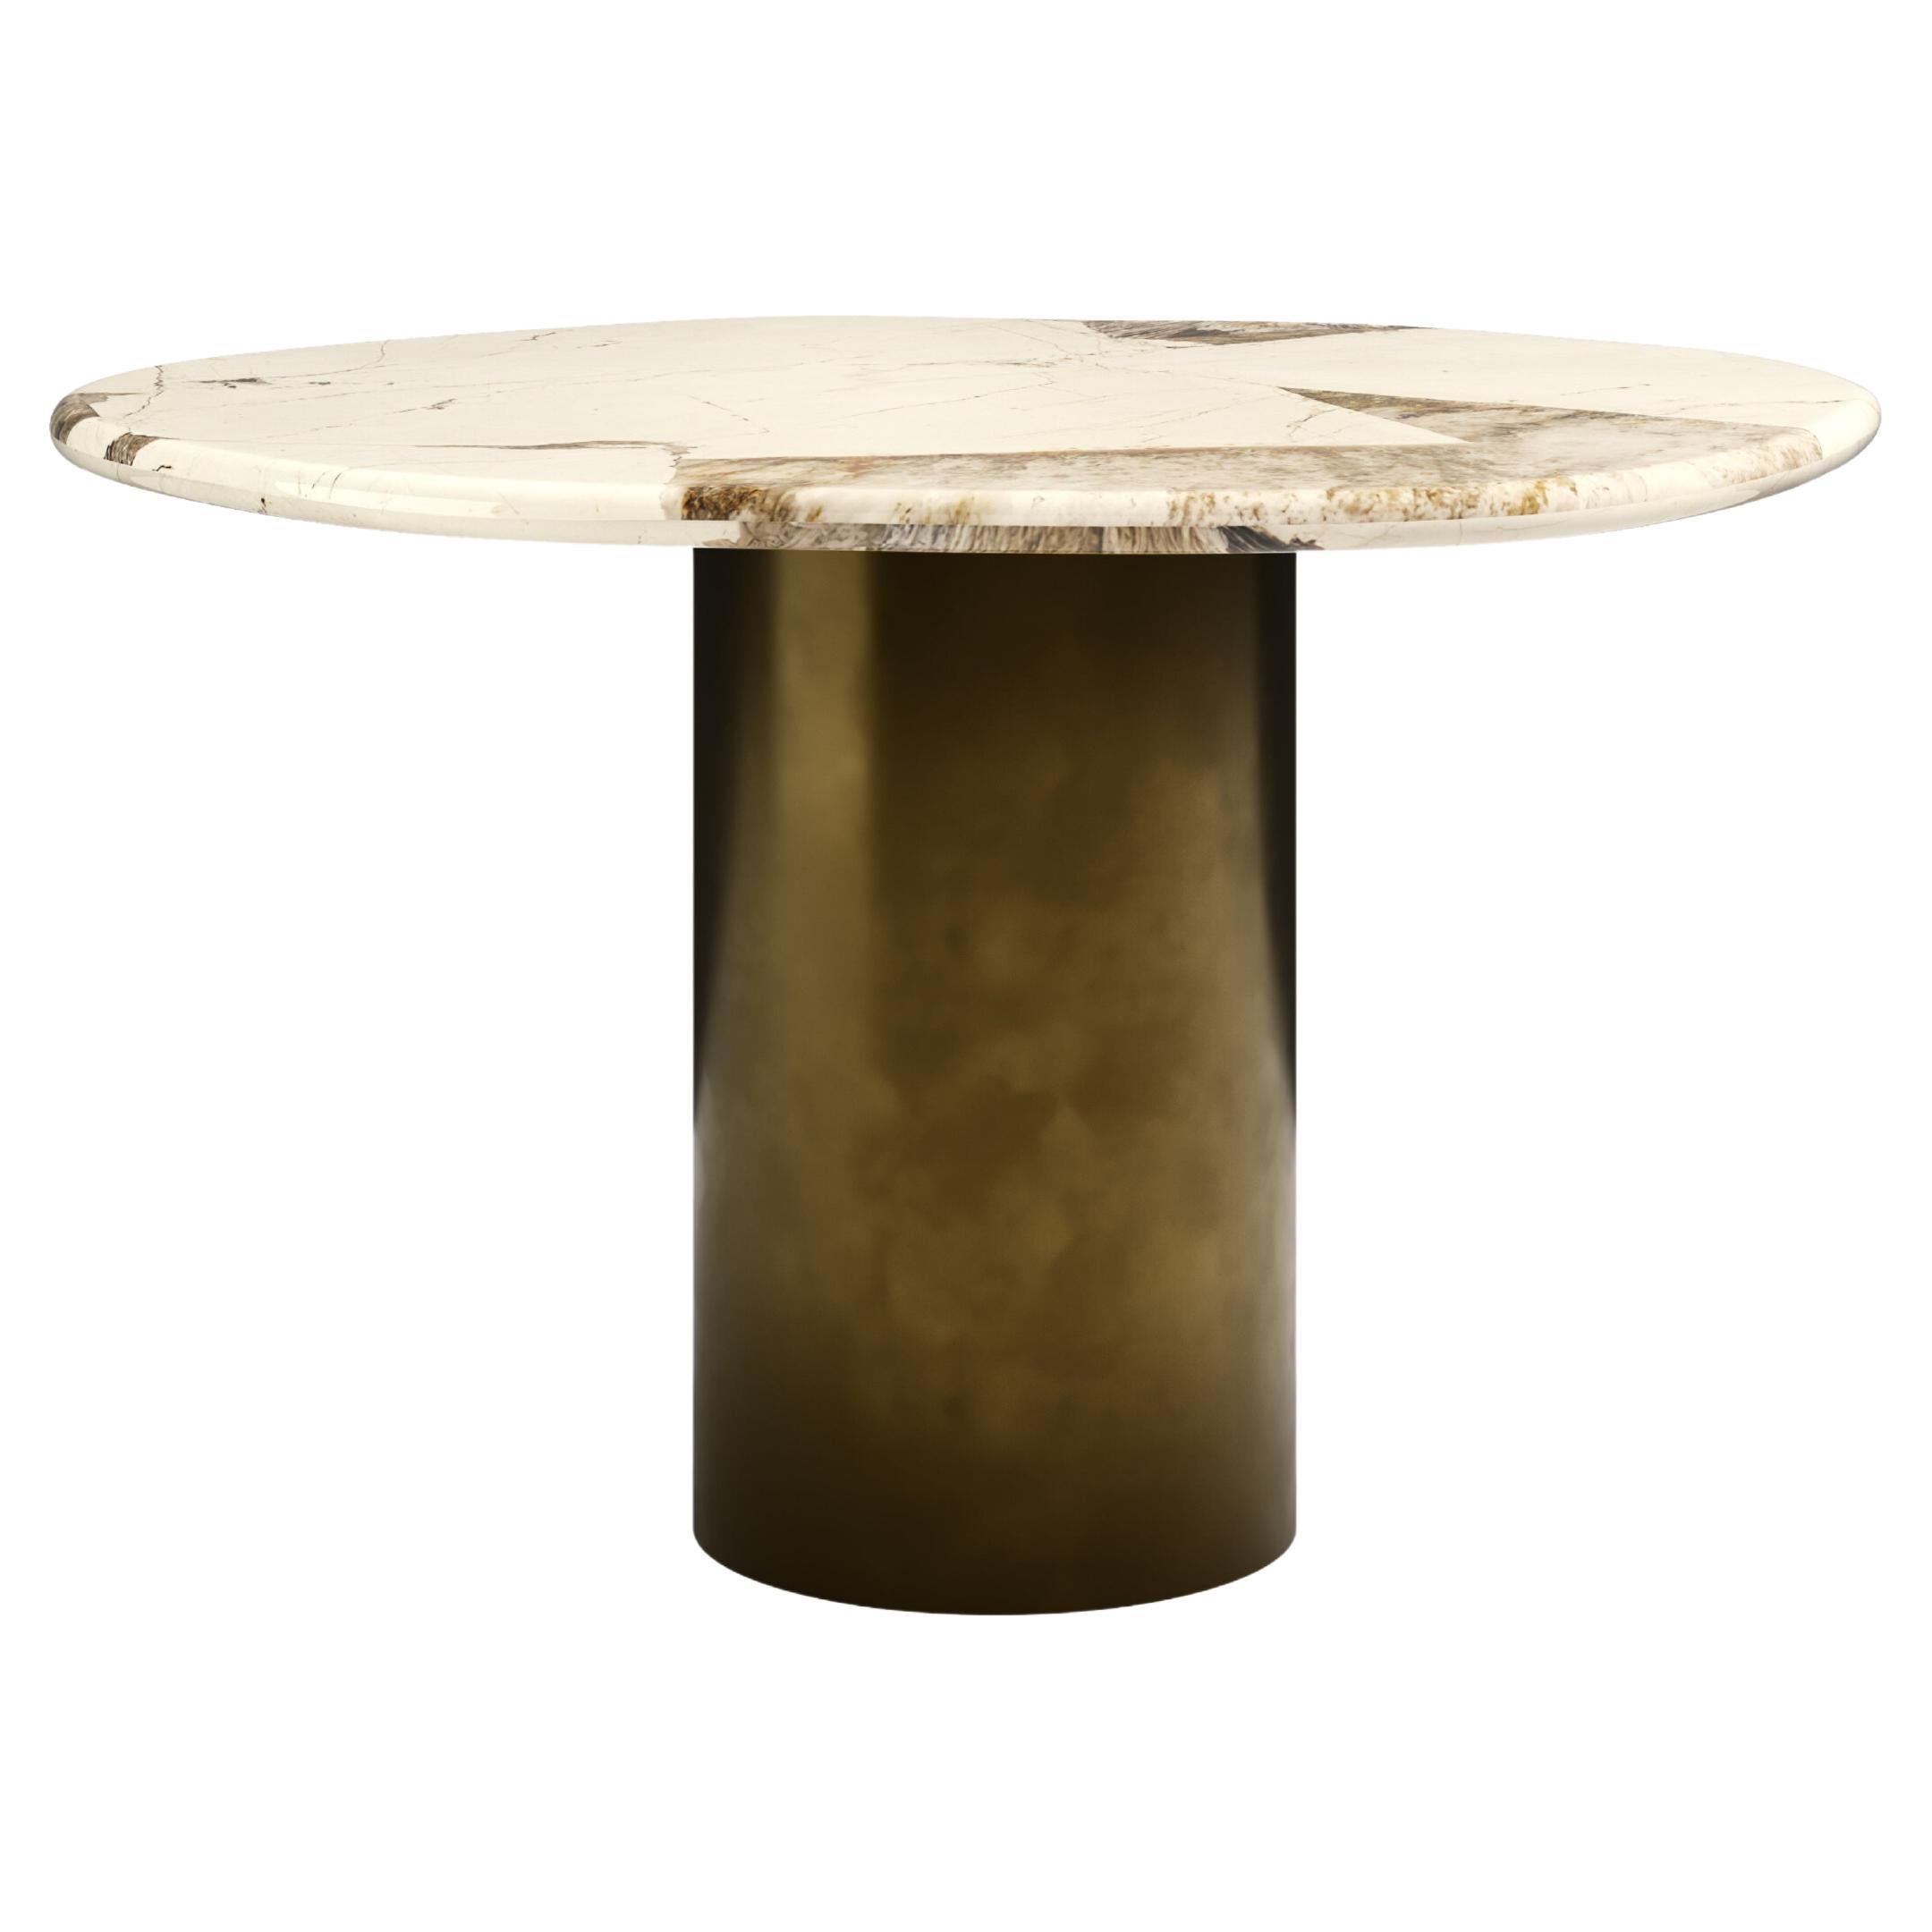 FORM(LA) Lago Round Dining Table 42”L x 42”W x 30”H Quartzite & Antique Marble For Sale